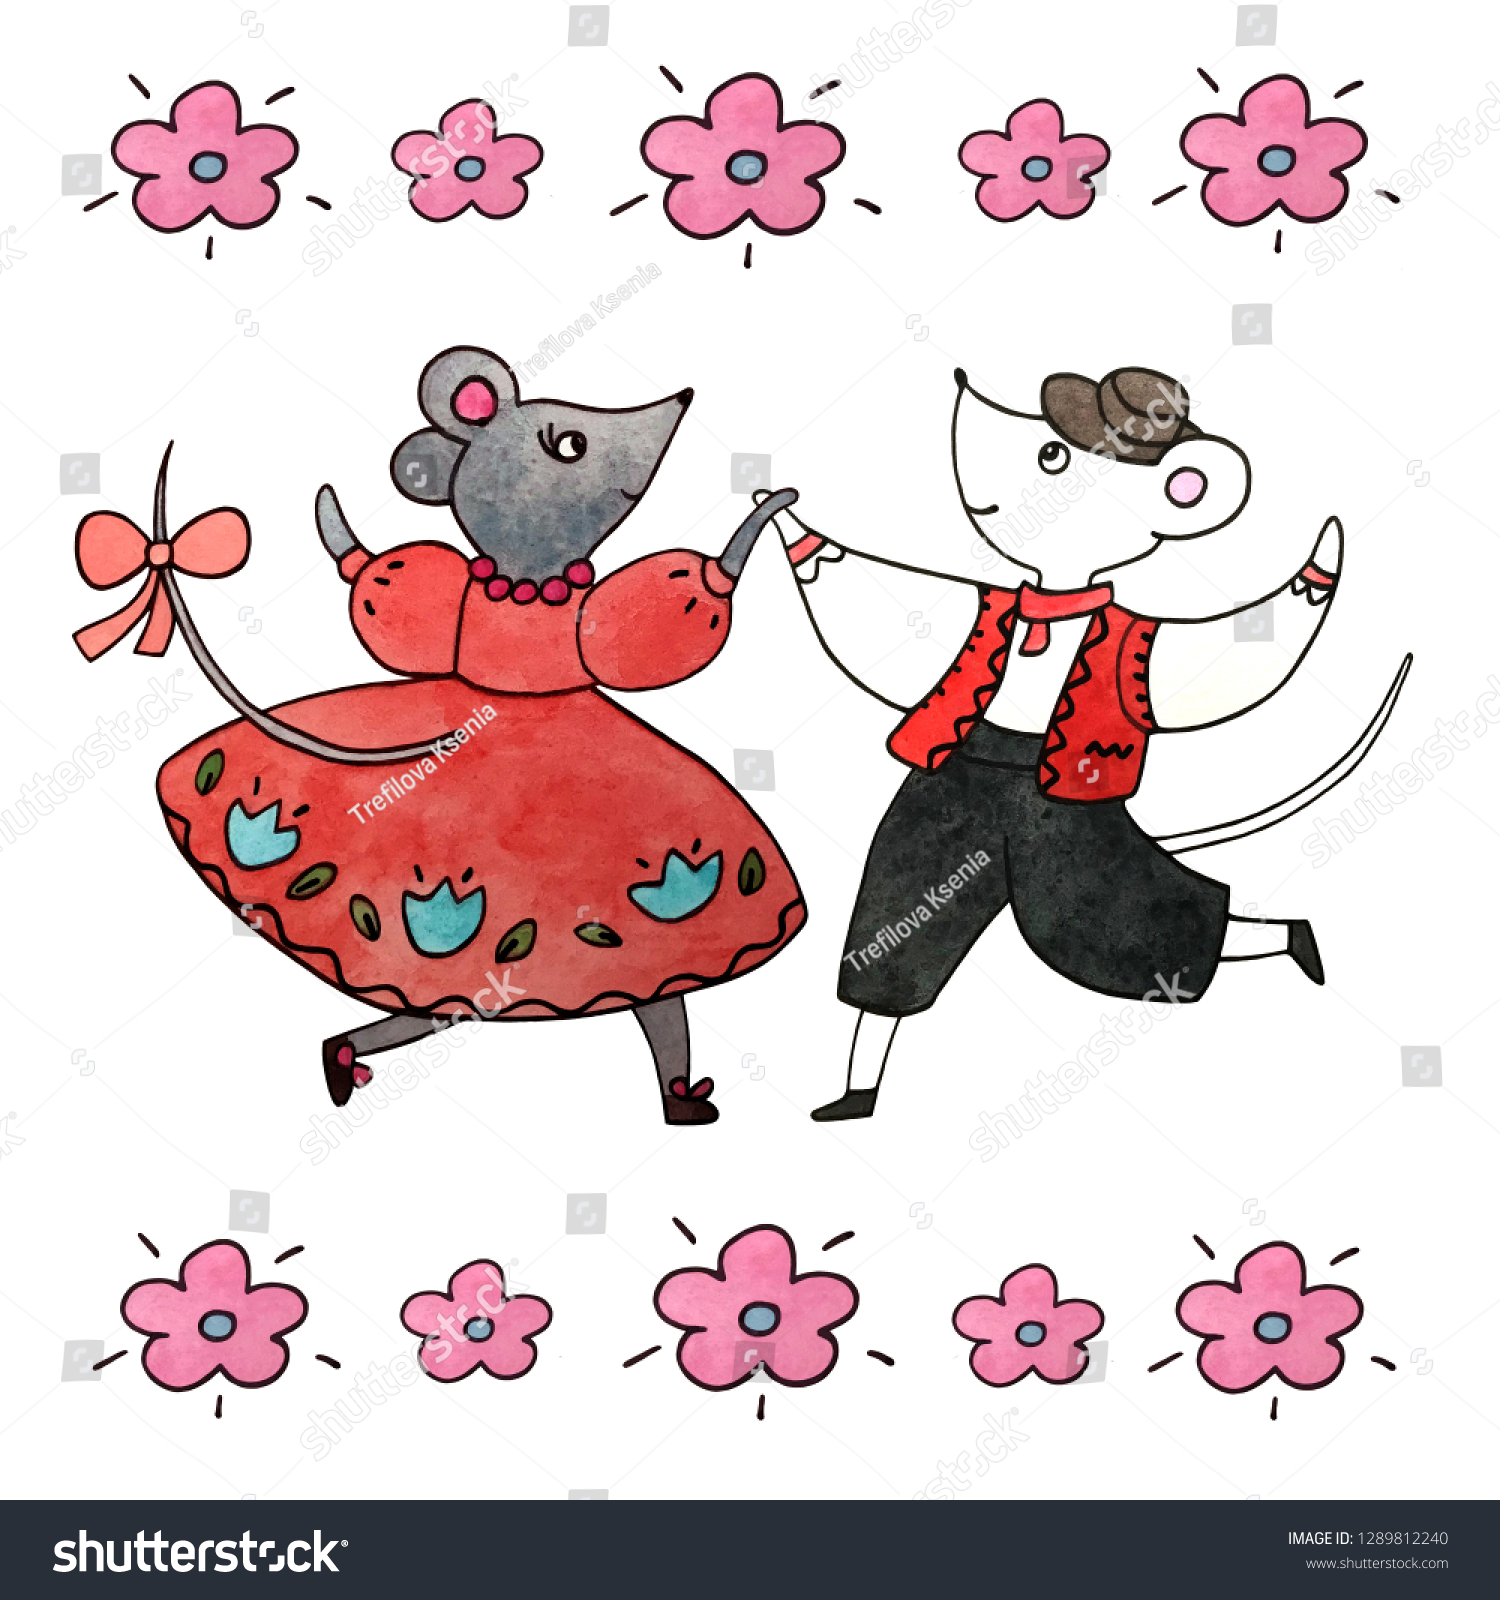 Dancing Mice Watercolor Illustration Stock Illustration 1289812240